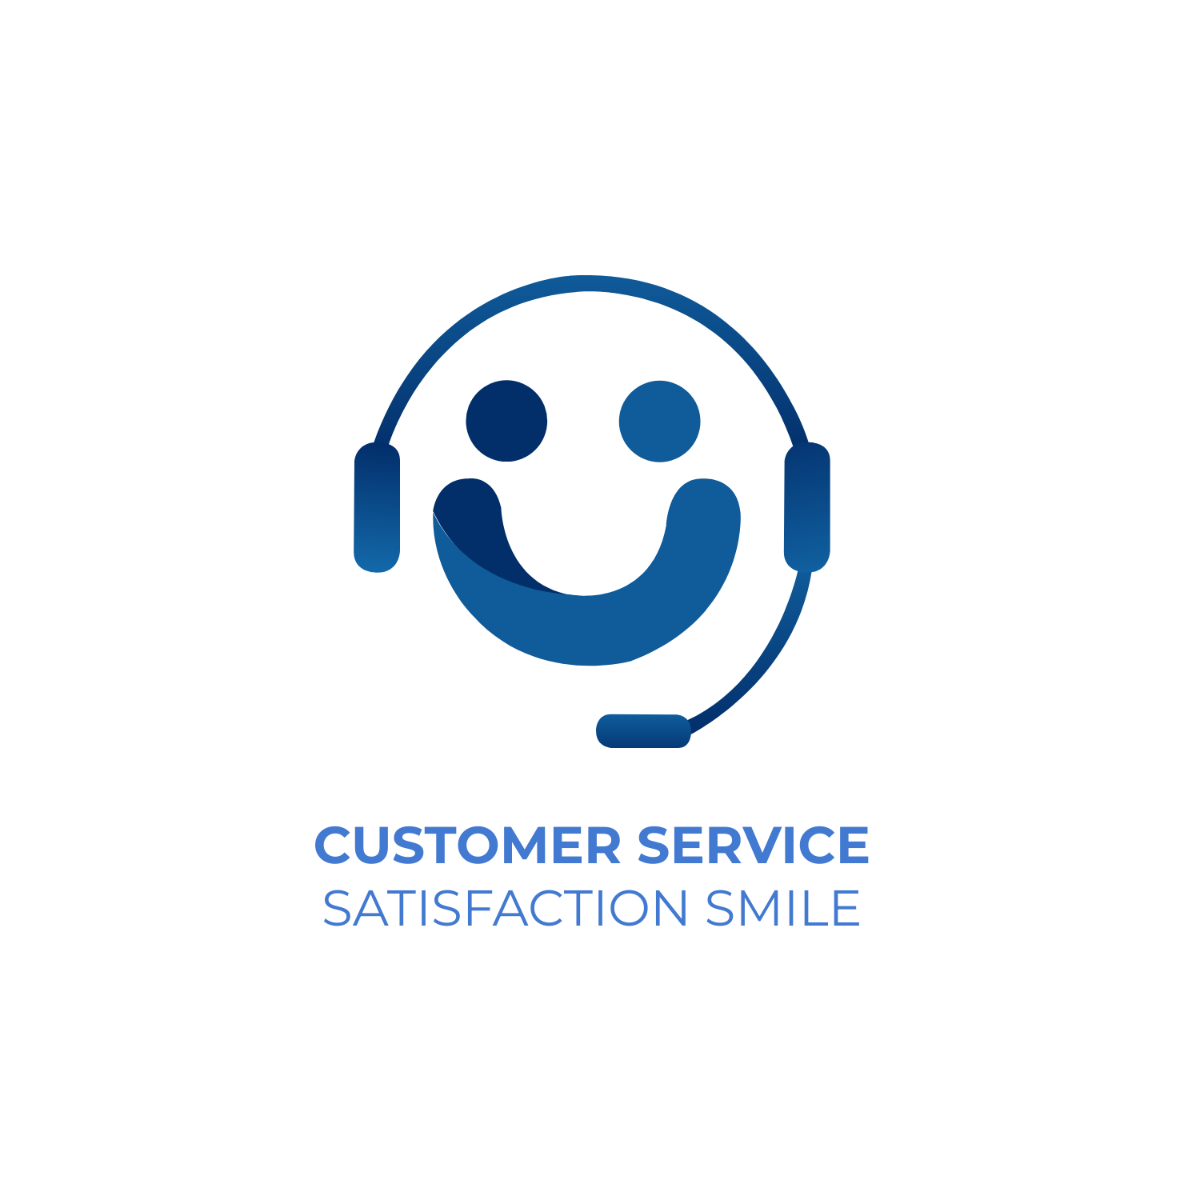 Free Customer Service Satisfaction Smile Logo Template